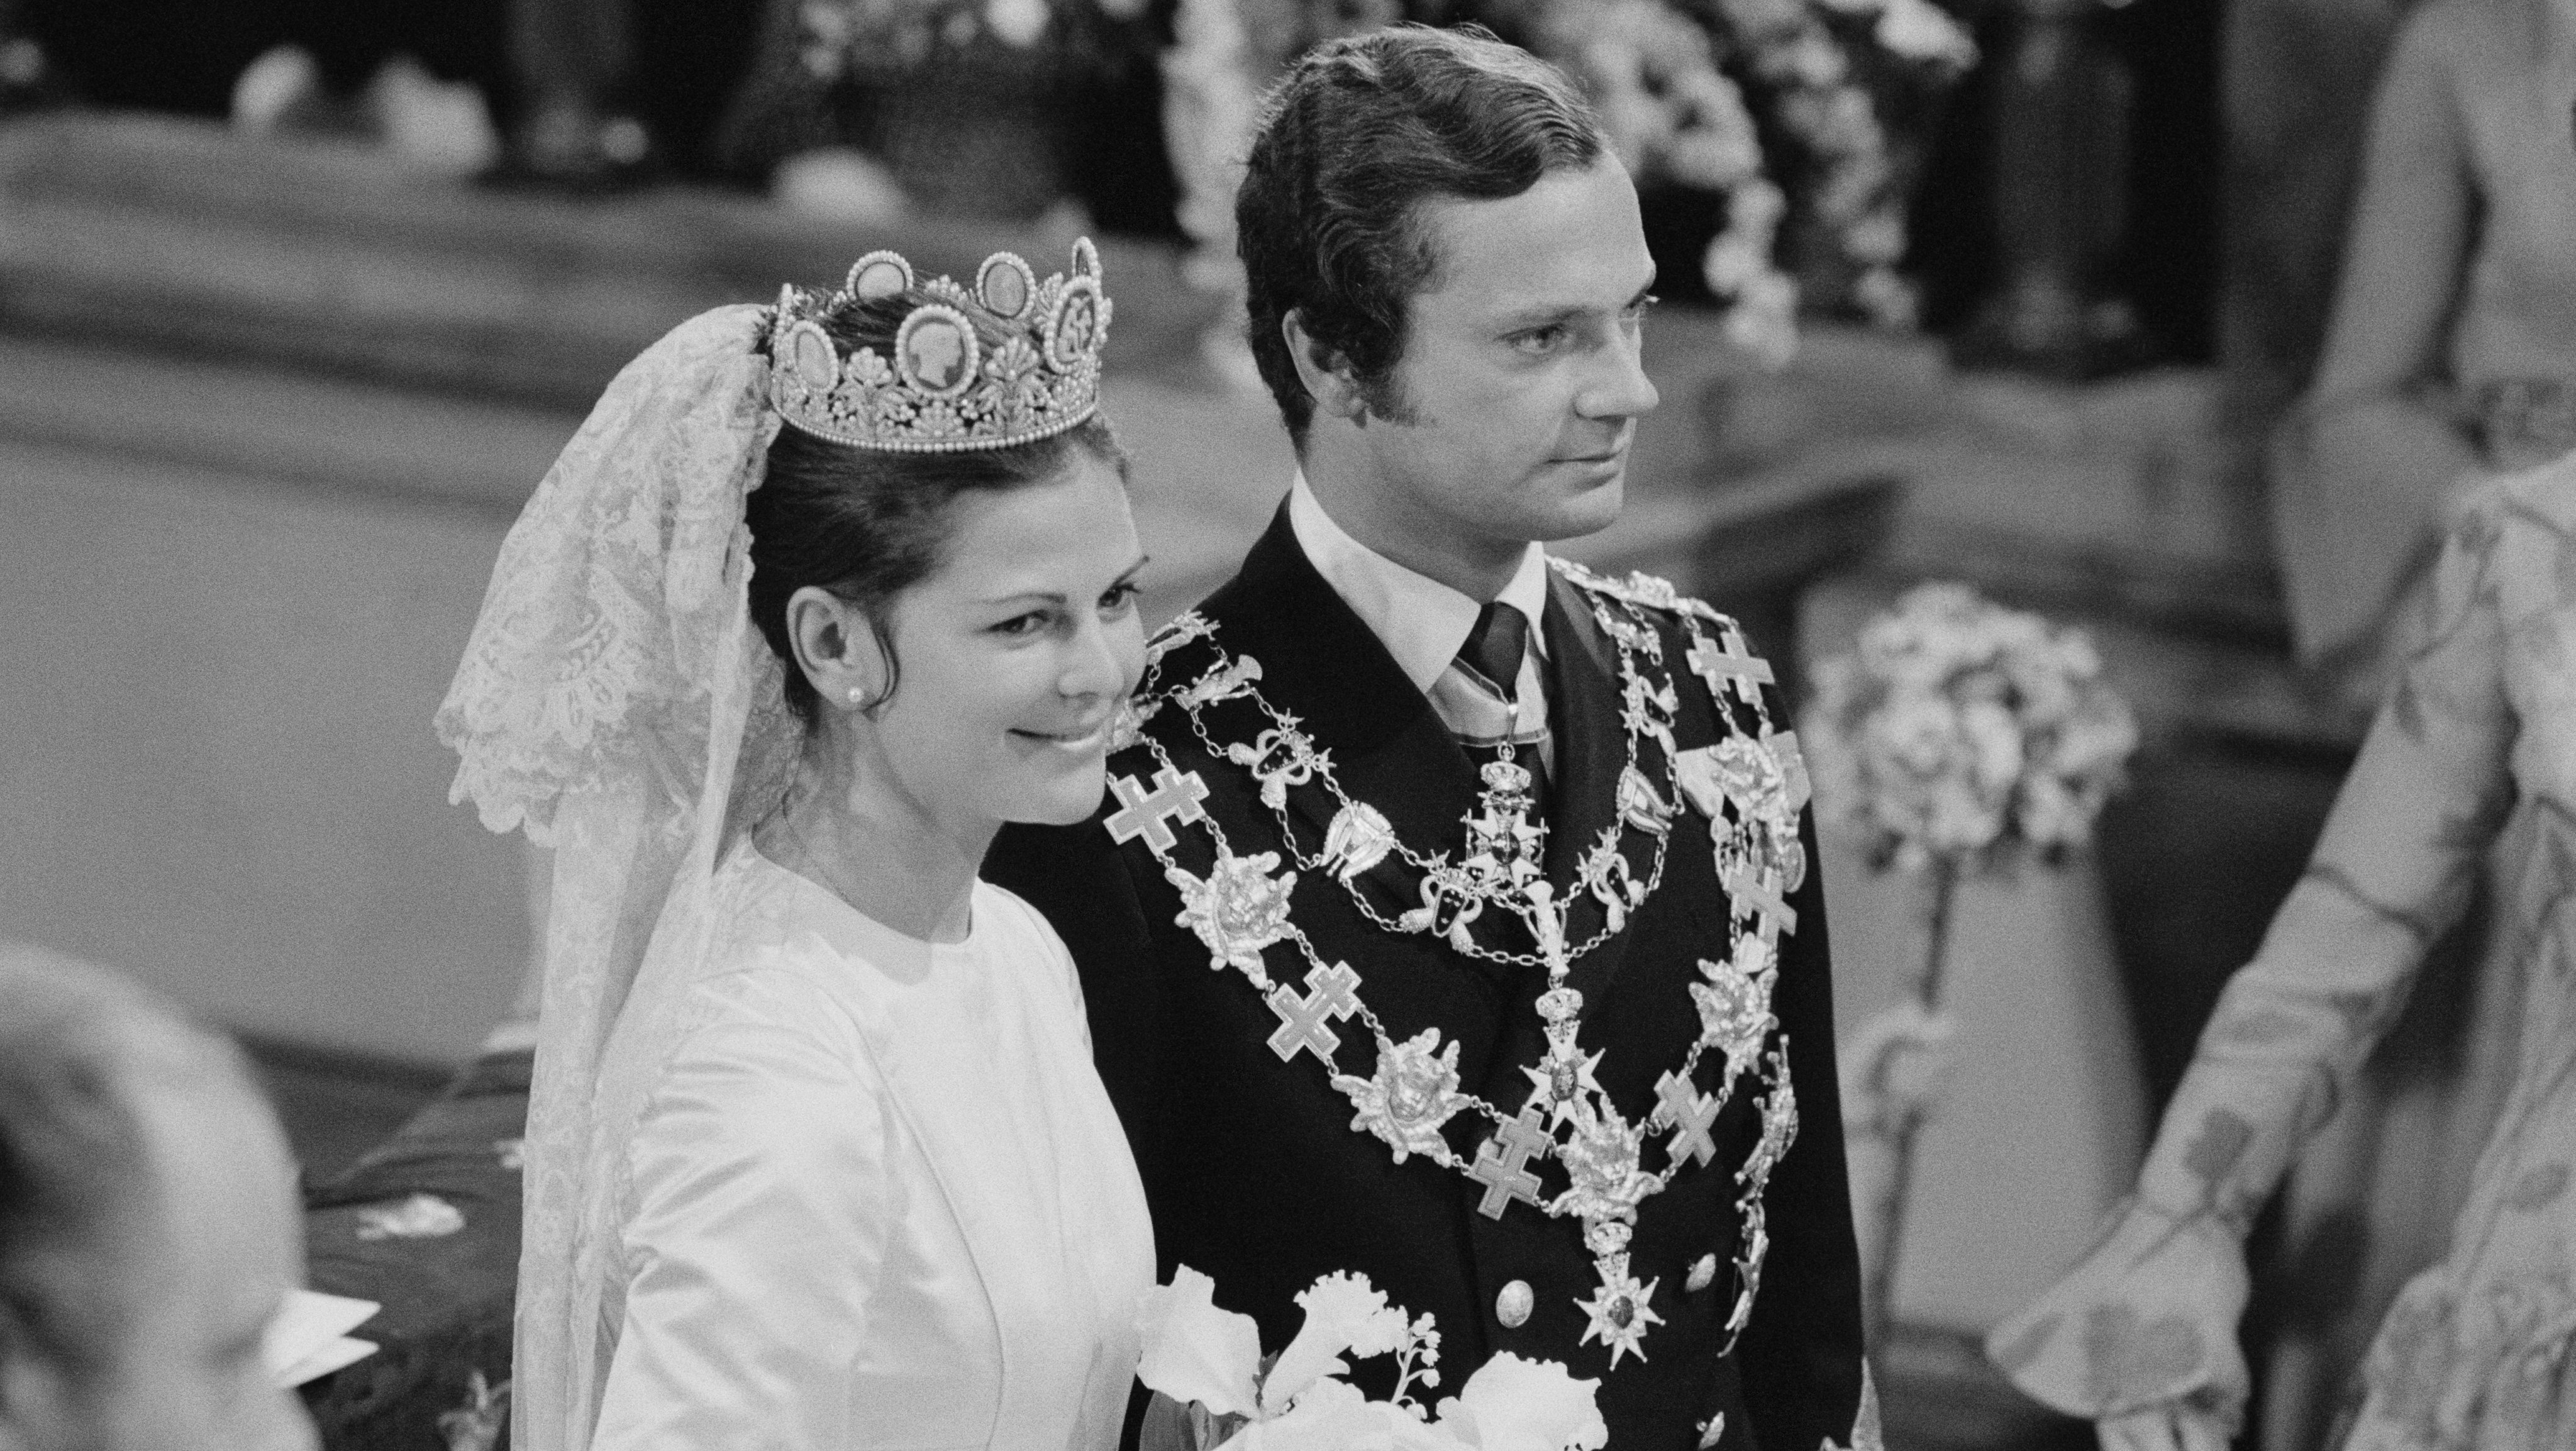 Mariage du Roi Carl Gustaf et de Silvia Sommerlath en 1976